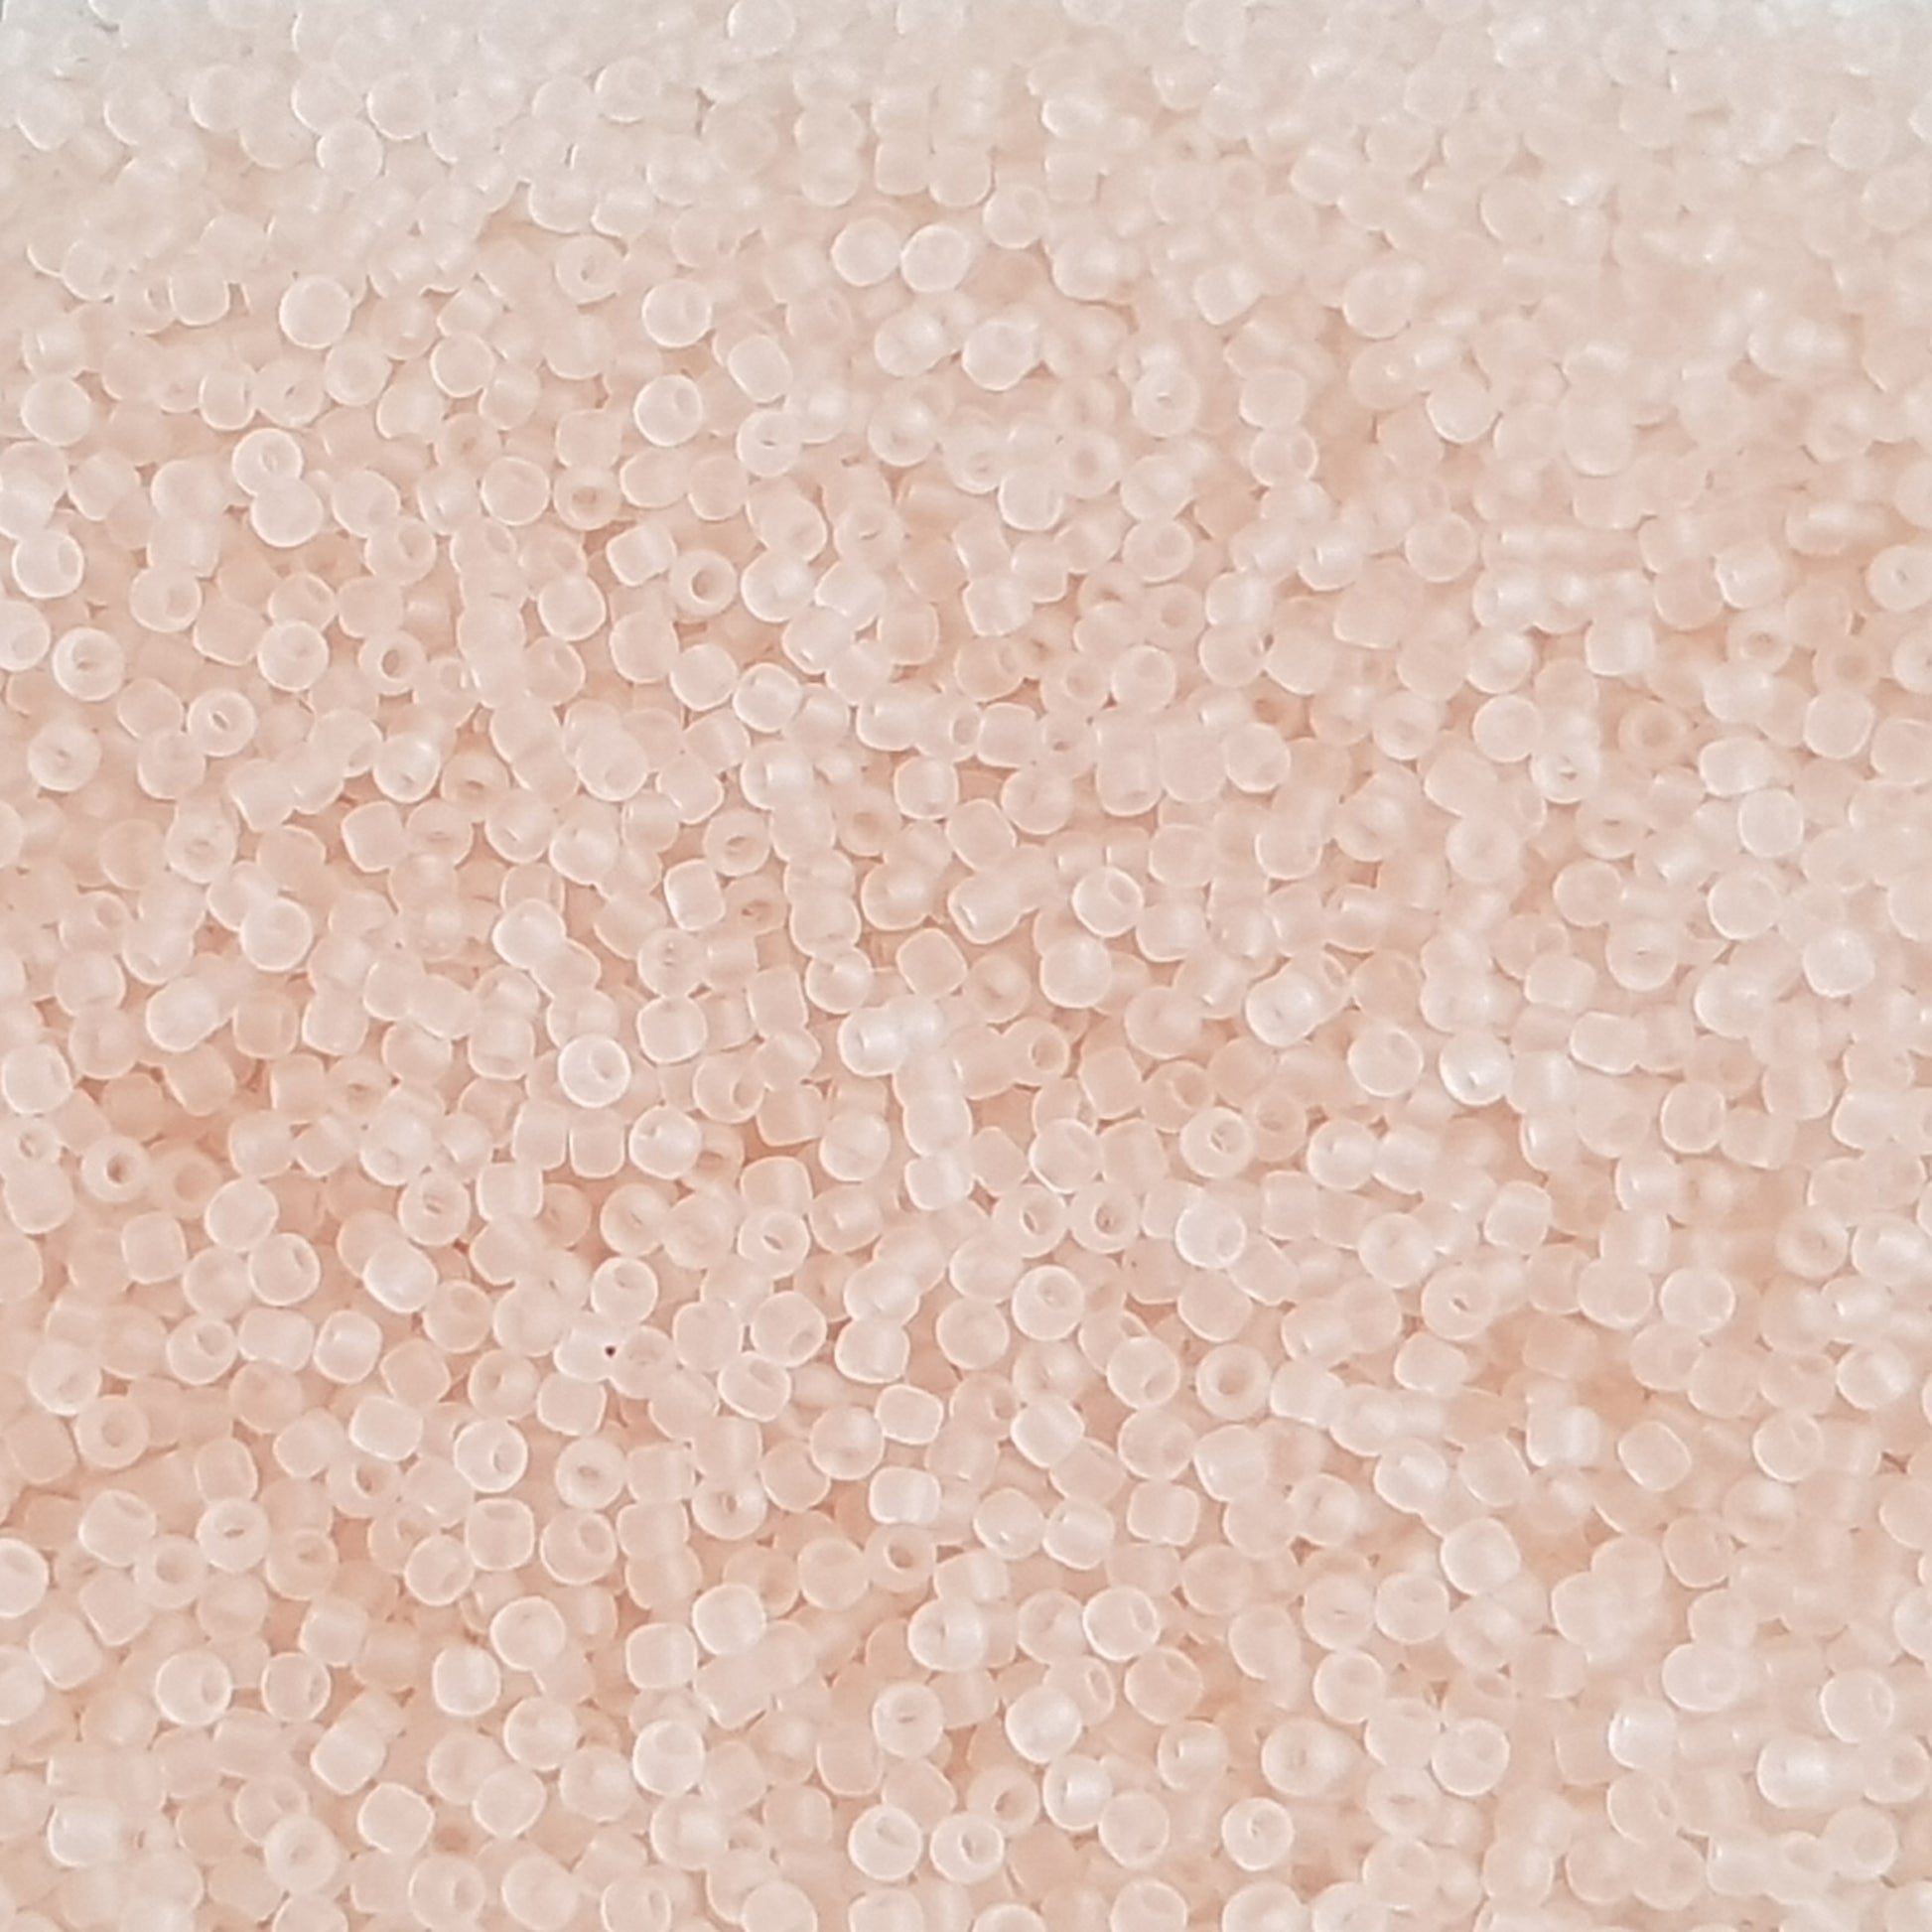 Pale pink transparent glass beads - Toho Seed Beads